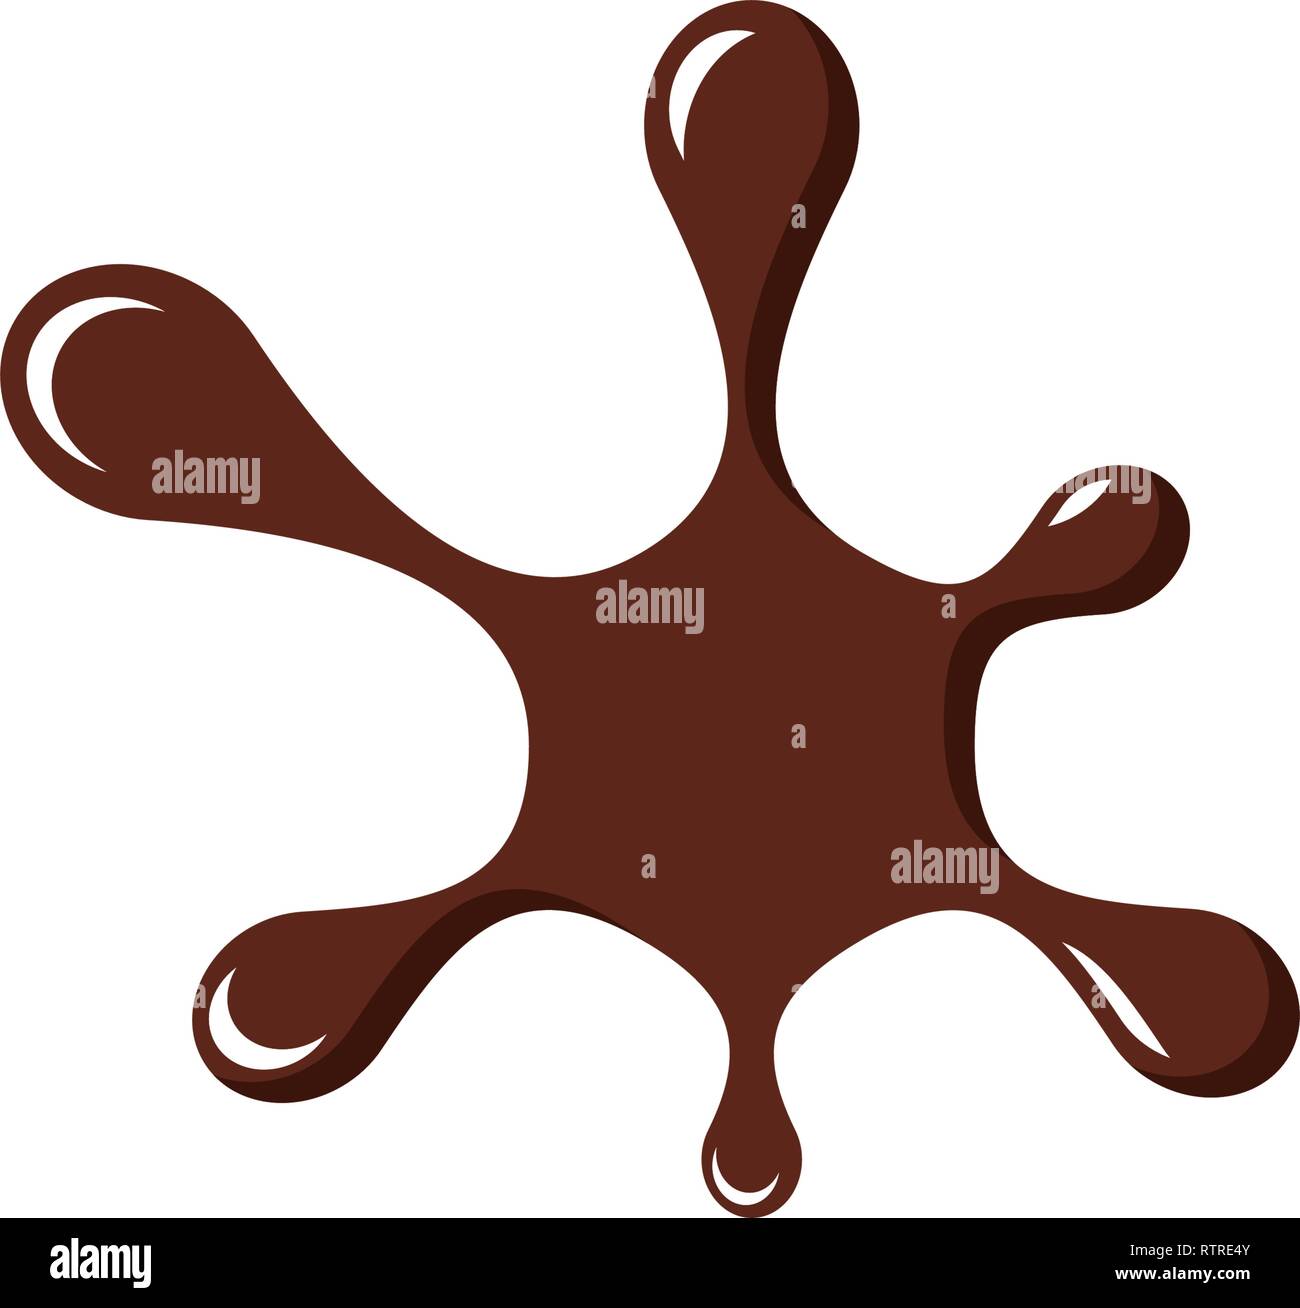 chocolate drop splash logo vector icon Stock Vector